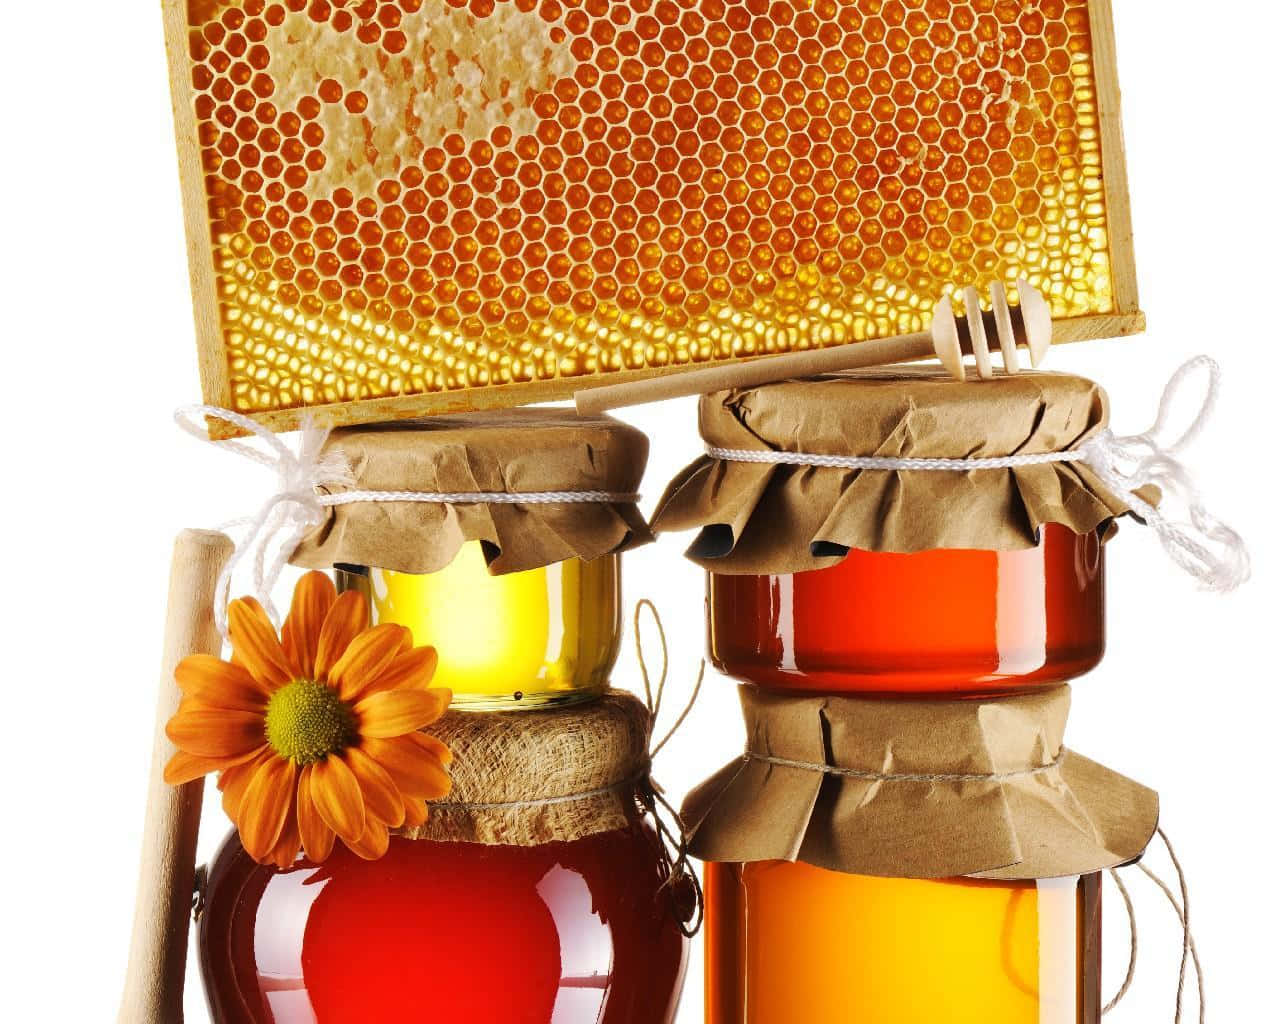 "Harvesting Sweet Honey From Beehives"